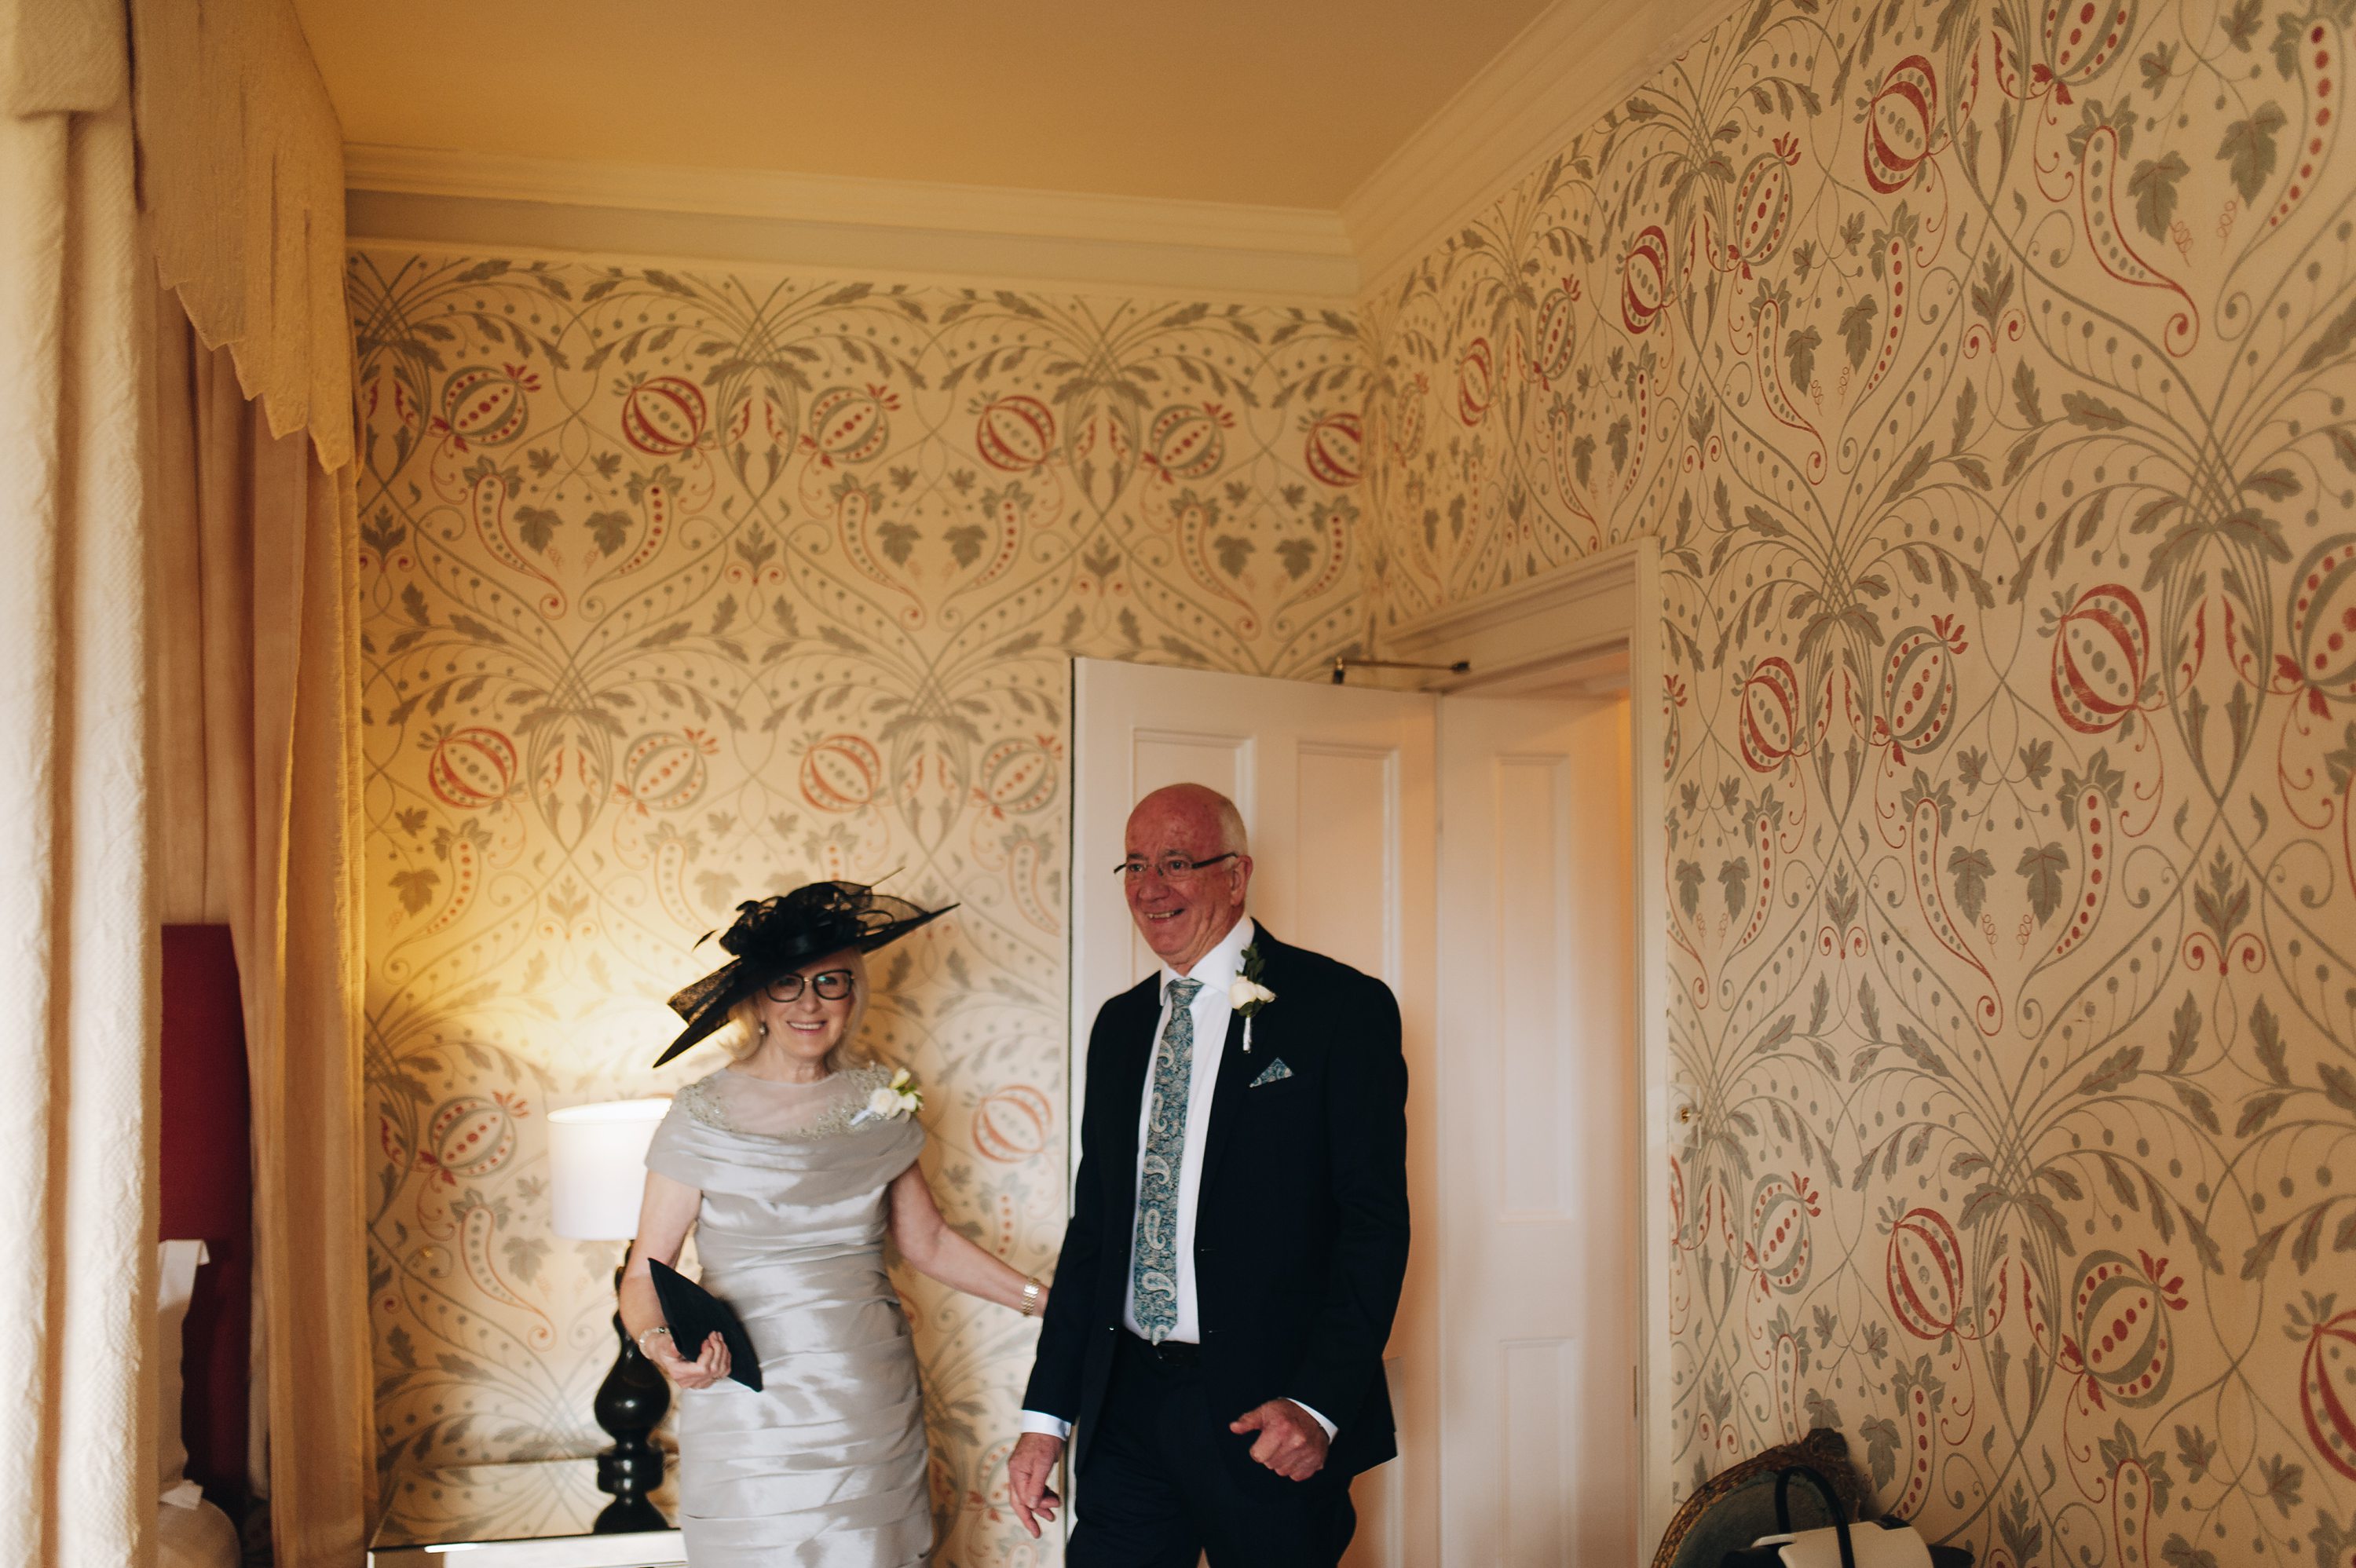 HODSOCK PRIORY WEDDING PHOTOGRAPHER